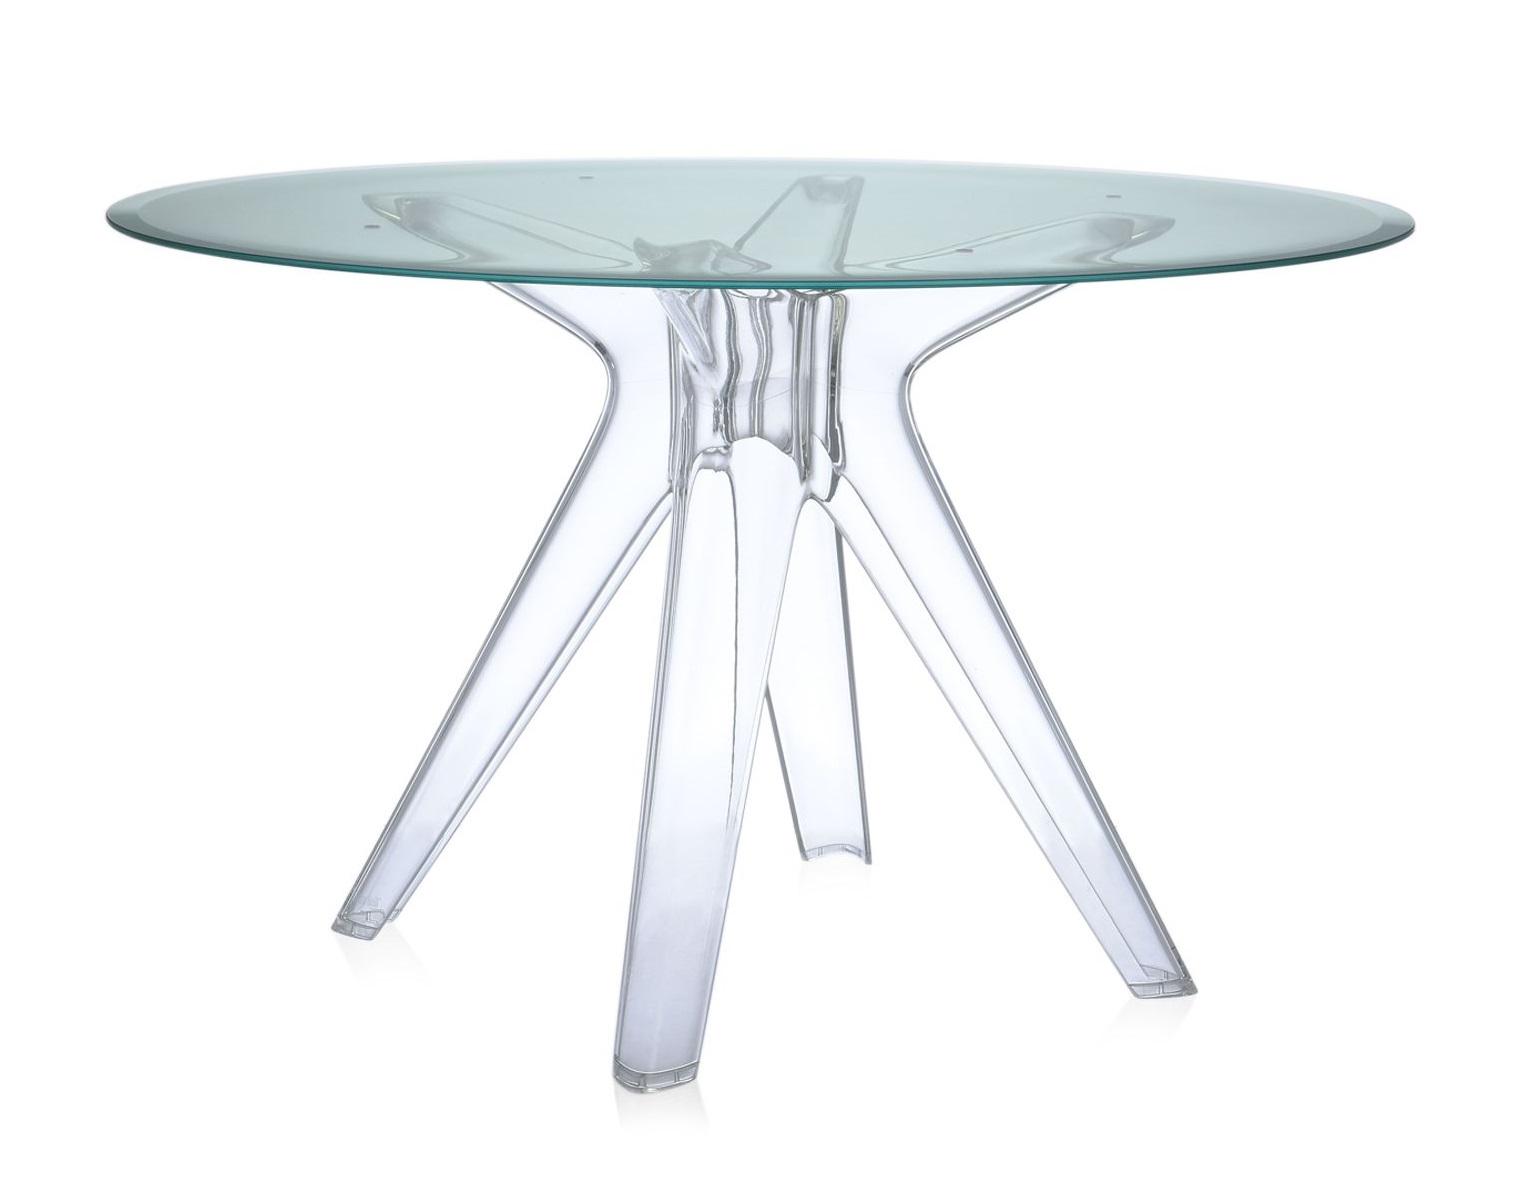 Masa Kartell Sir Gio design Philippe Starck diametru 120cm verde – transparent Living & Dining